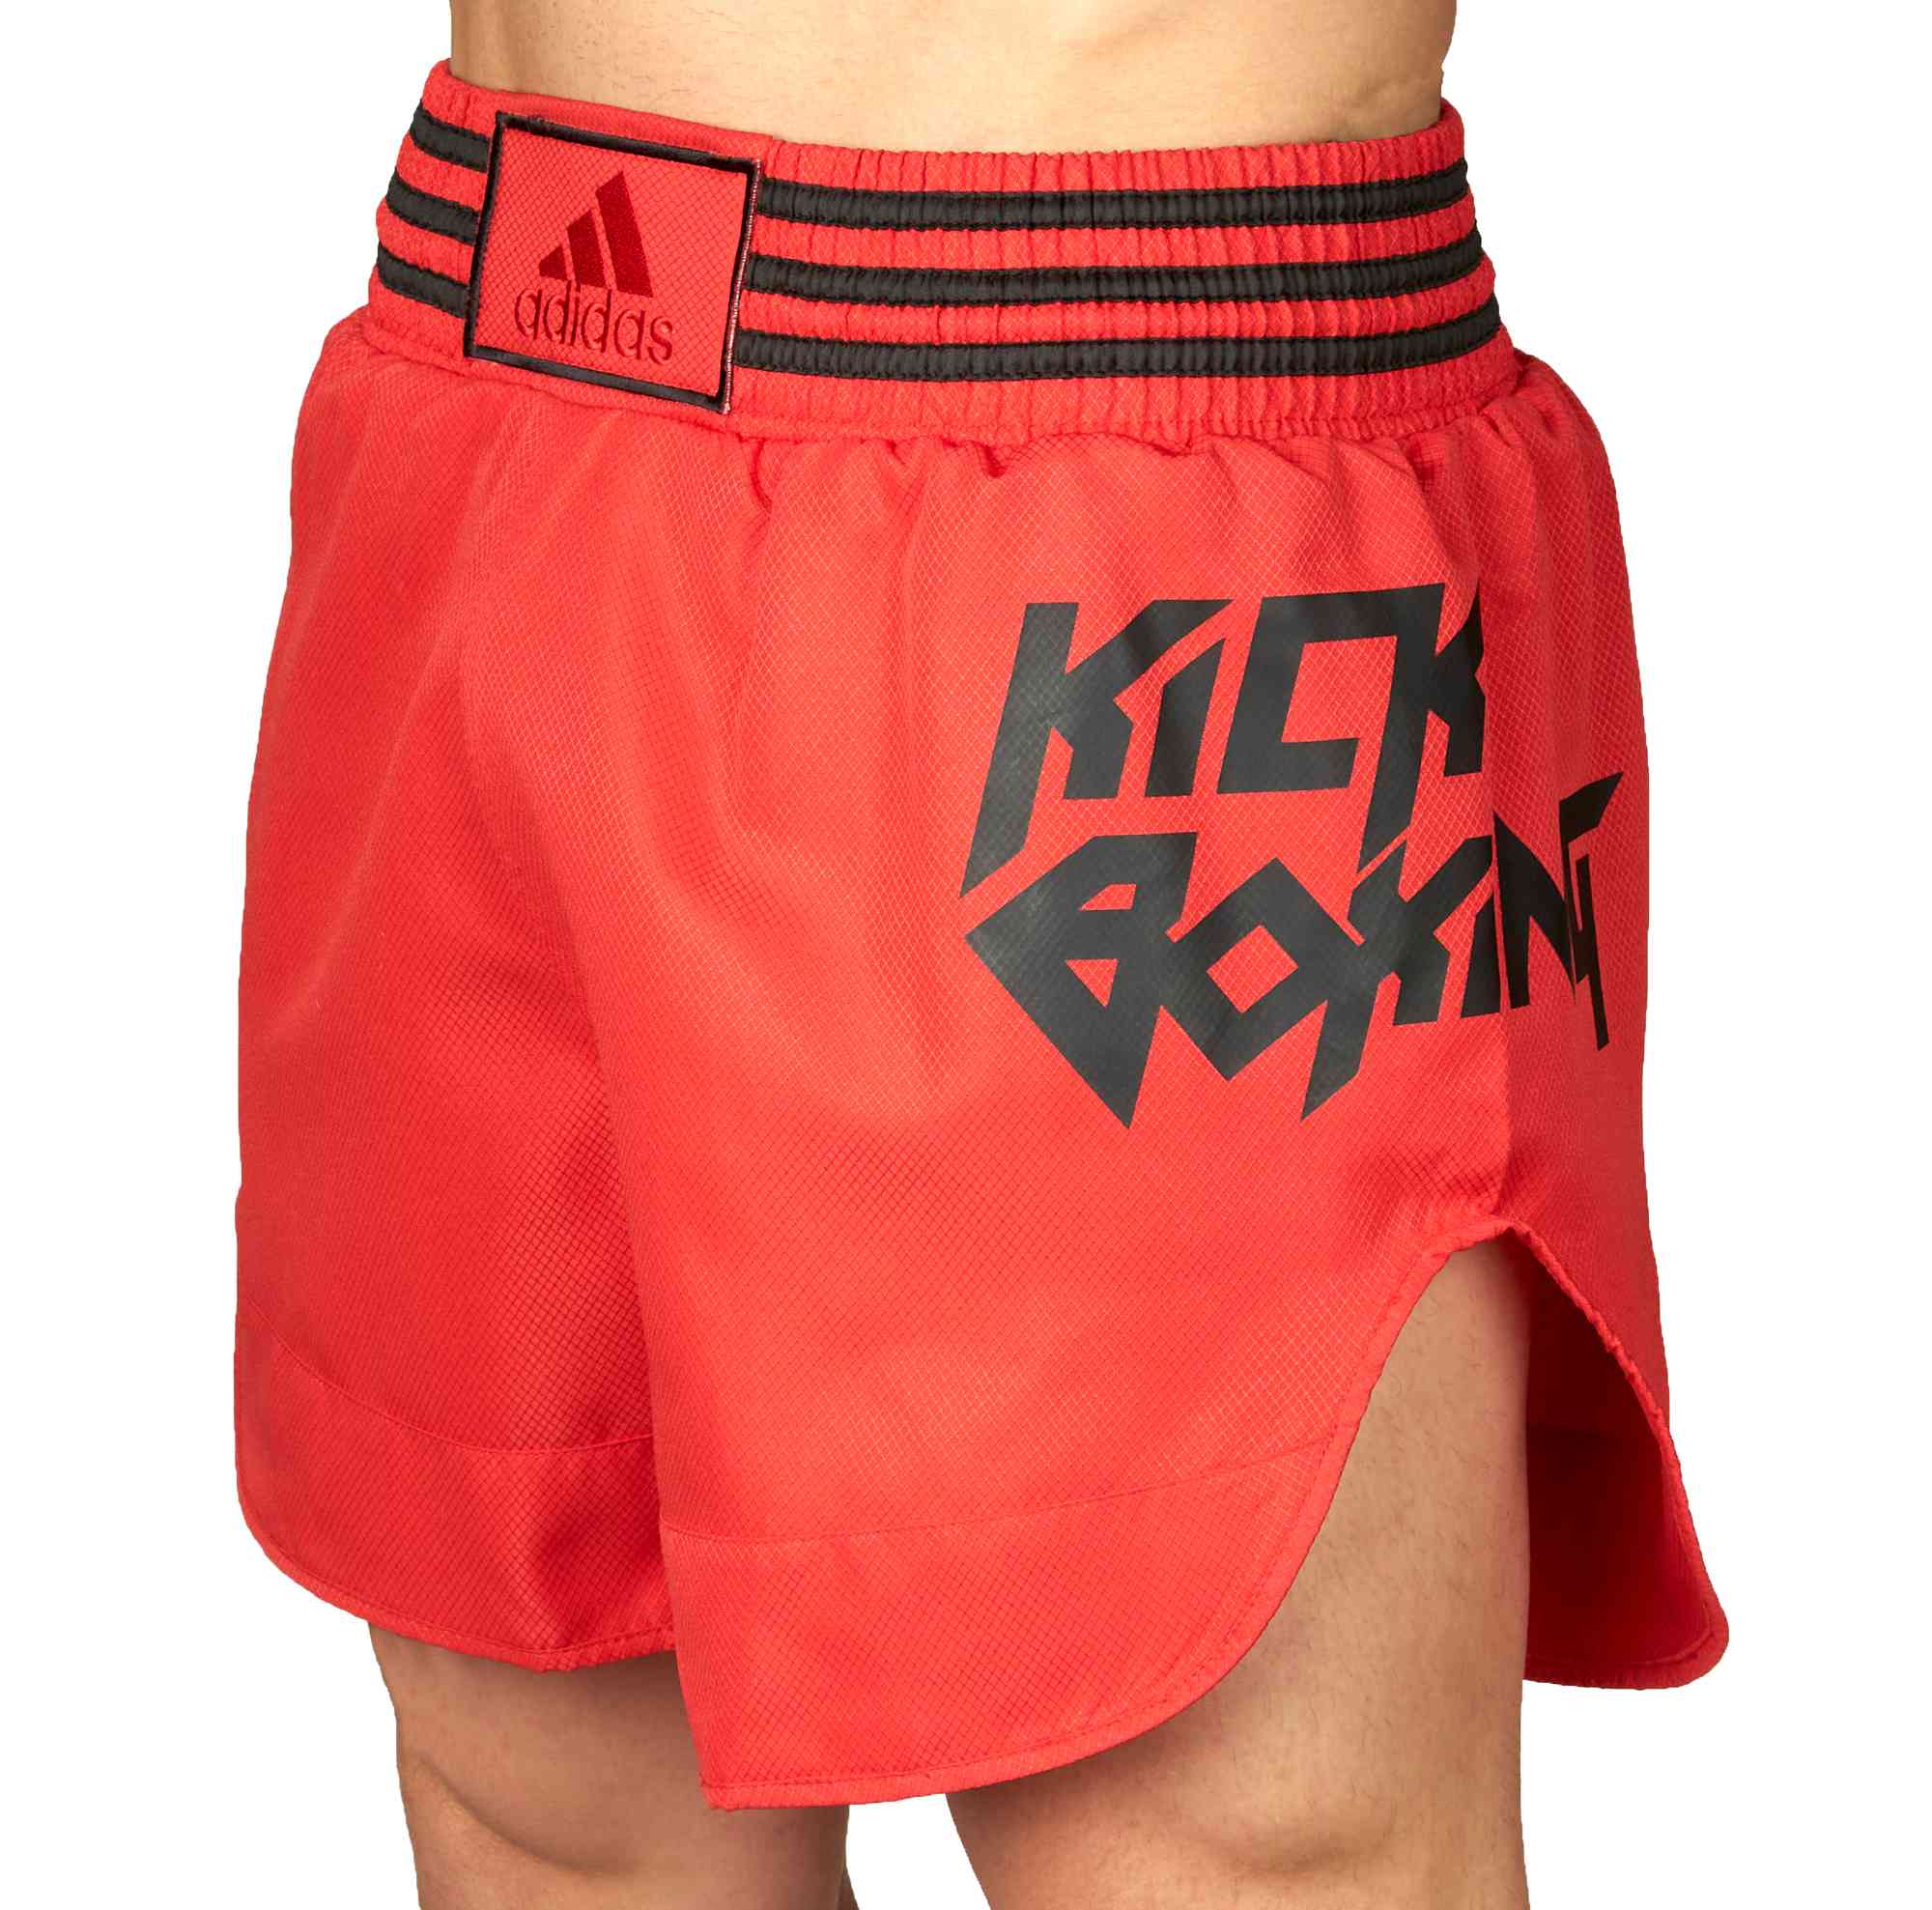 Team Hili adidas Kick Boxing Shorts red/black, ADISKB02